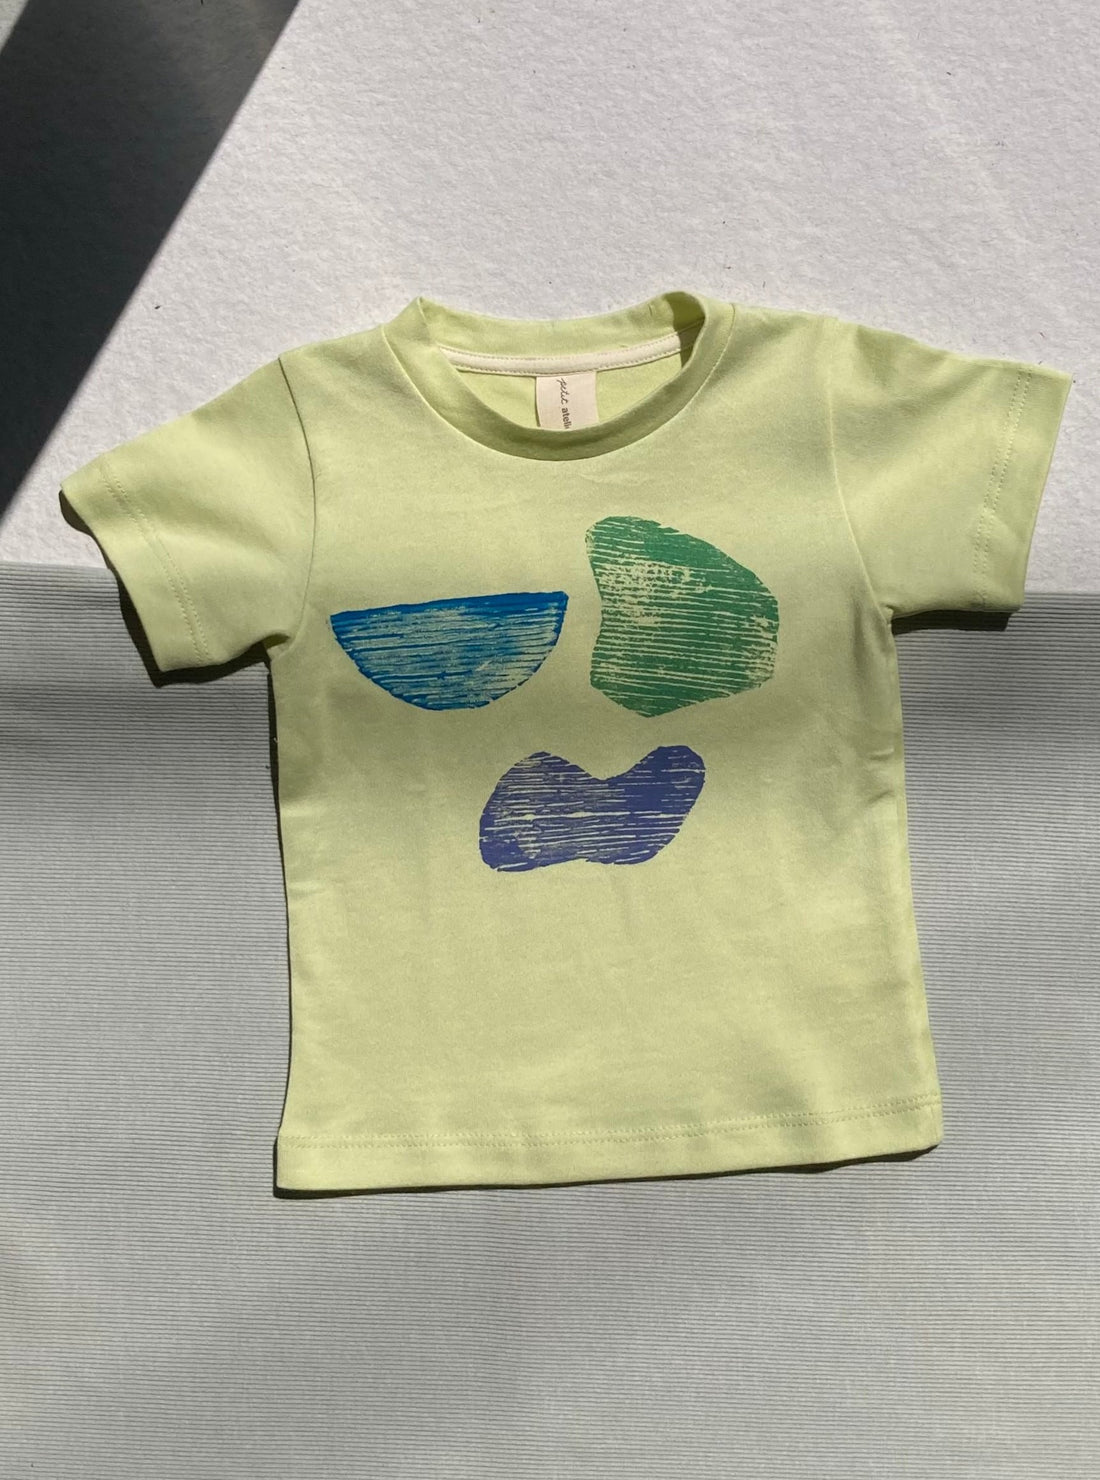 Kids t-shirt No2270k, printed by hand